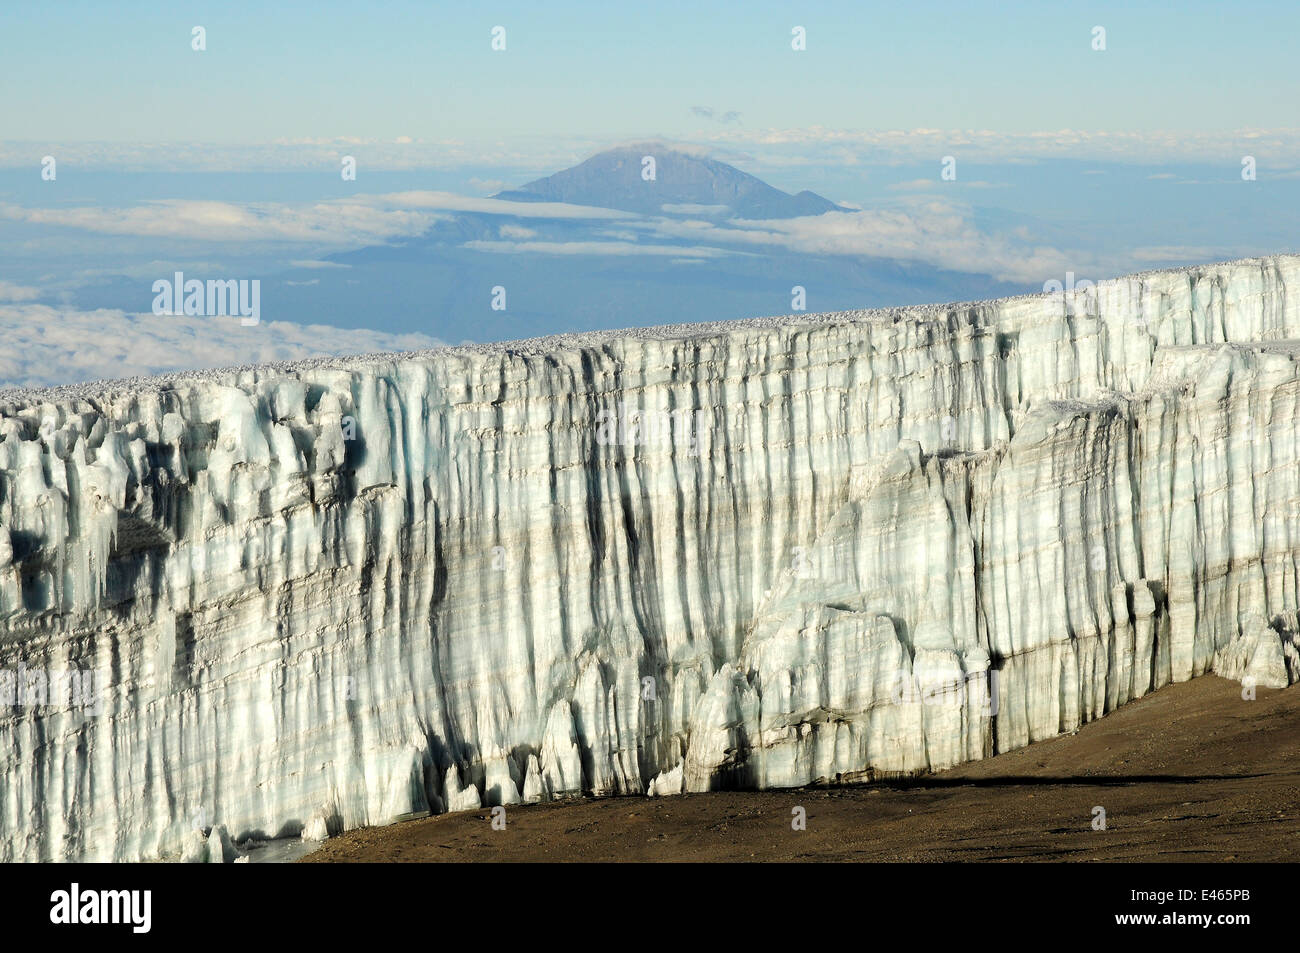 Looking down on the last glaciers near the summit of Mount Kilimanjaro, Tanzania, October 2008 Stock Photo